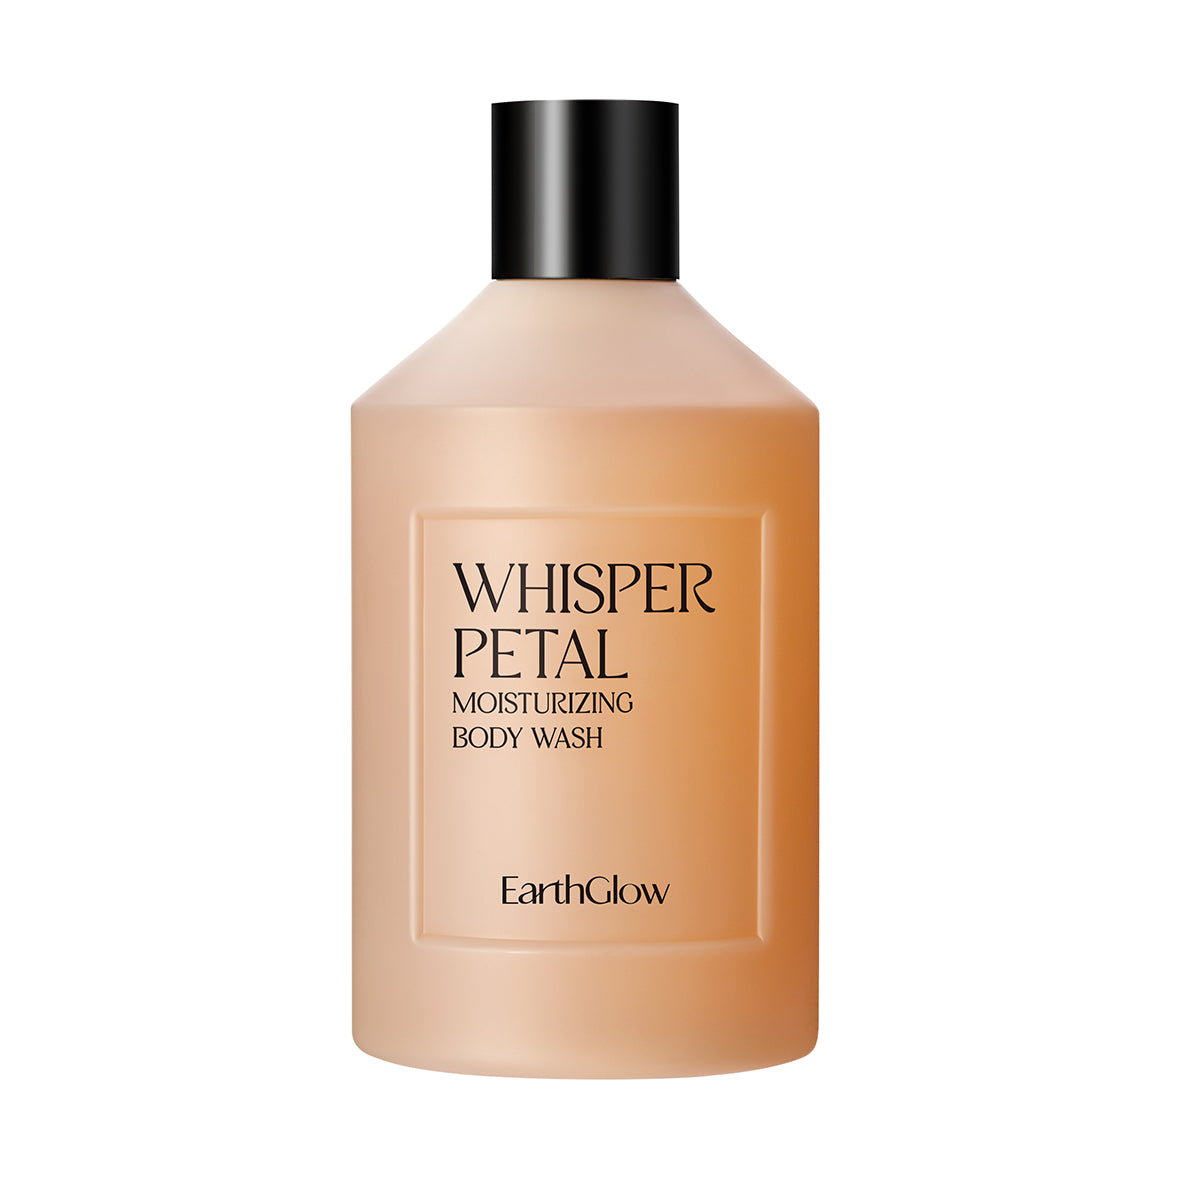 moisturizing-body-wash_whisper-petal_1.jpg